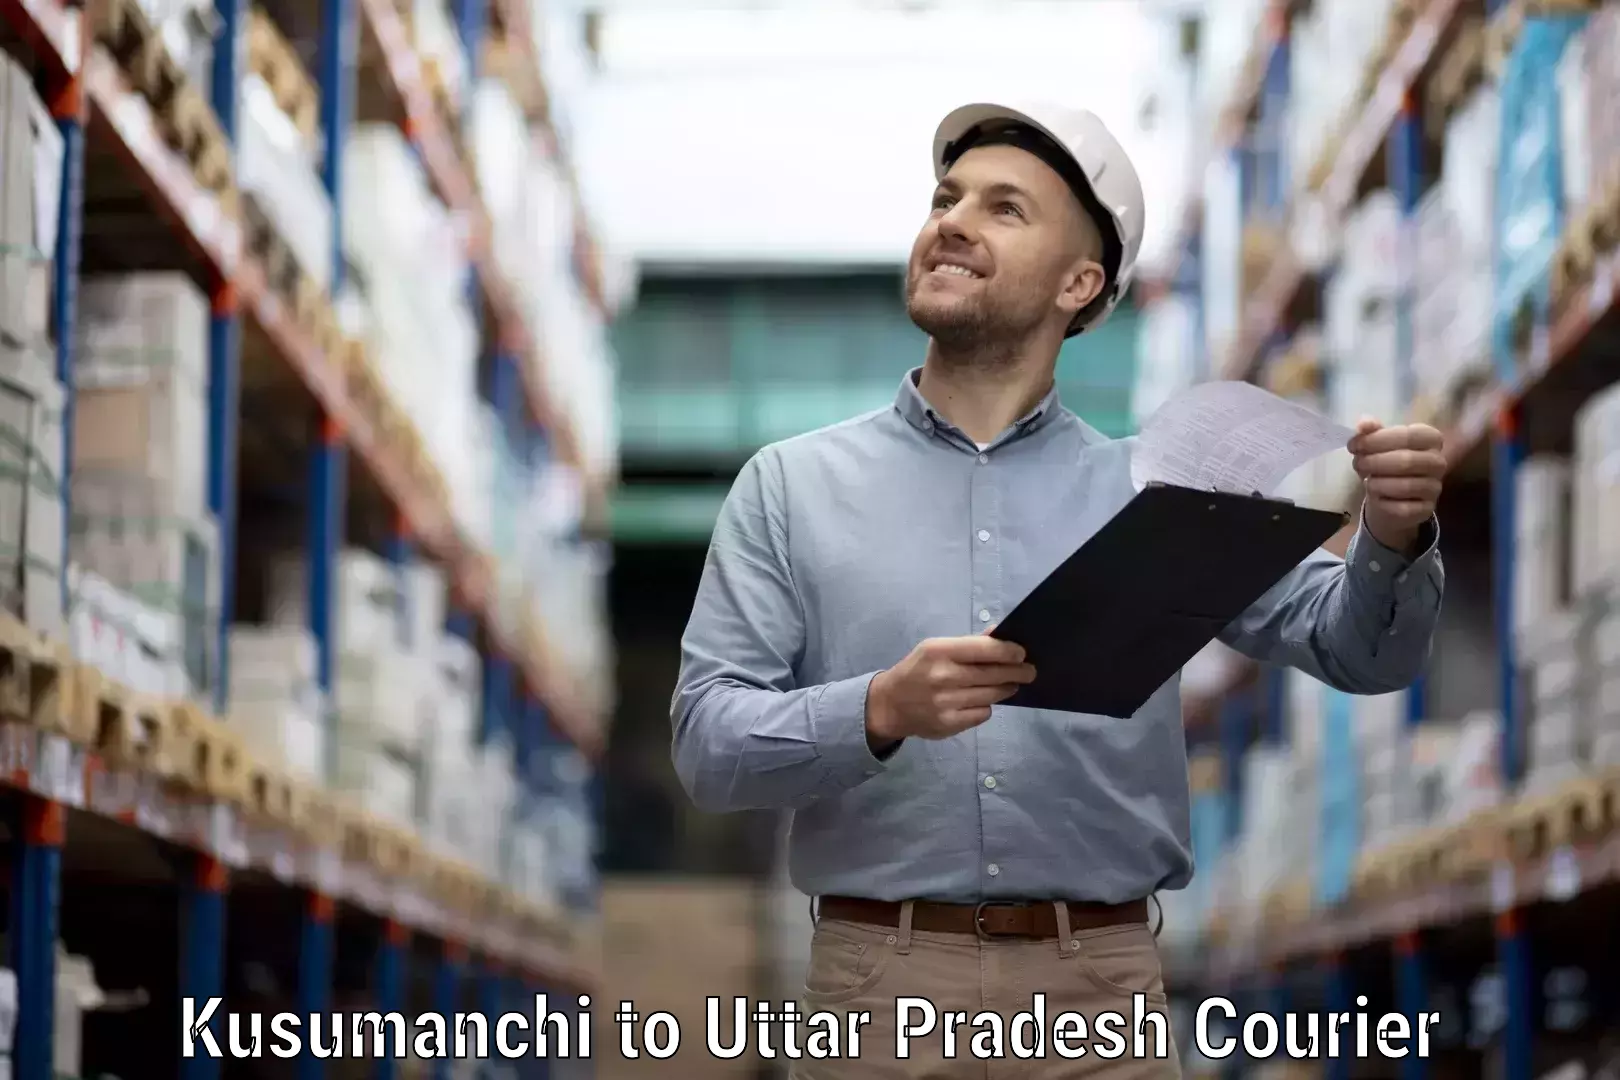 Courier service efficiency Kusumanchi to Aligarh Muslim University